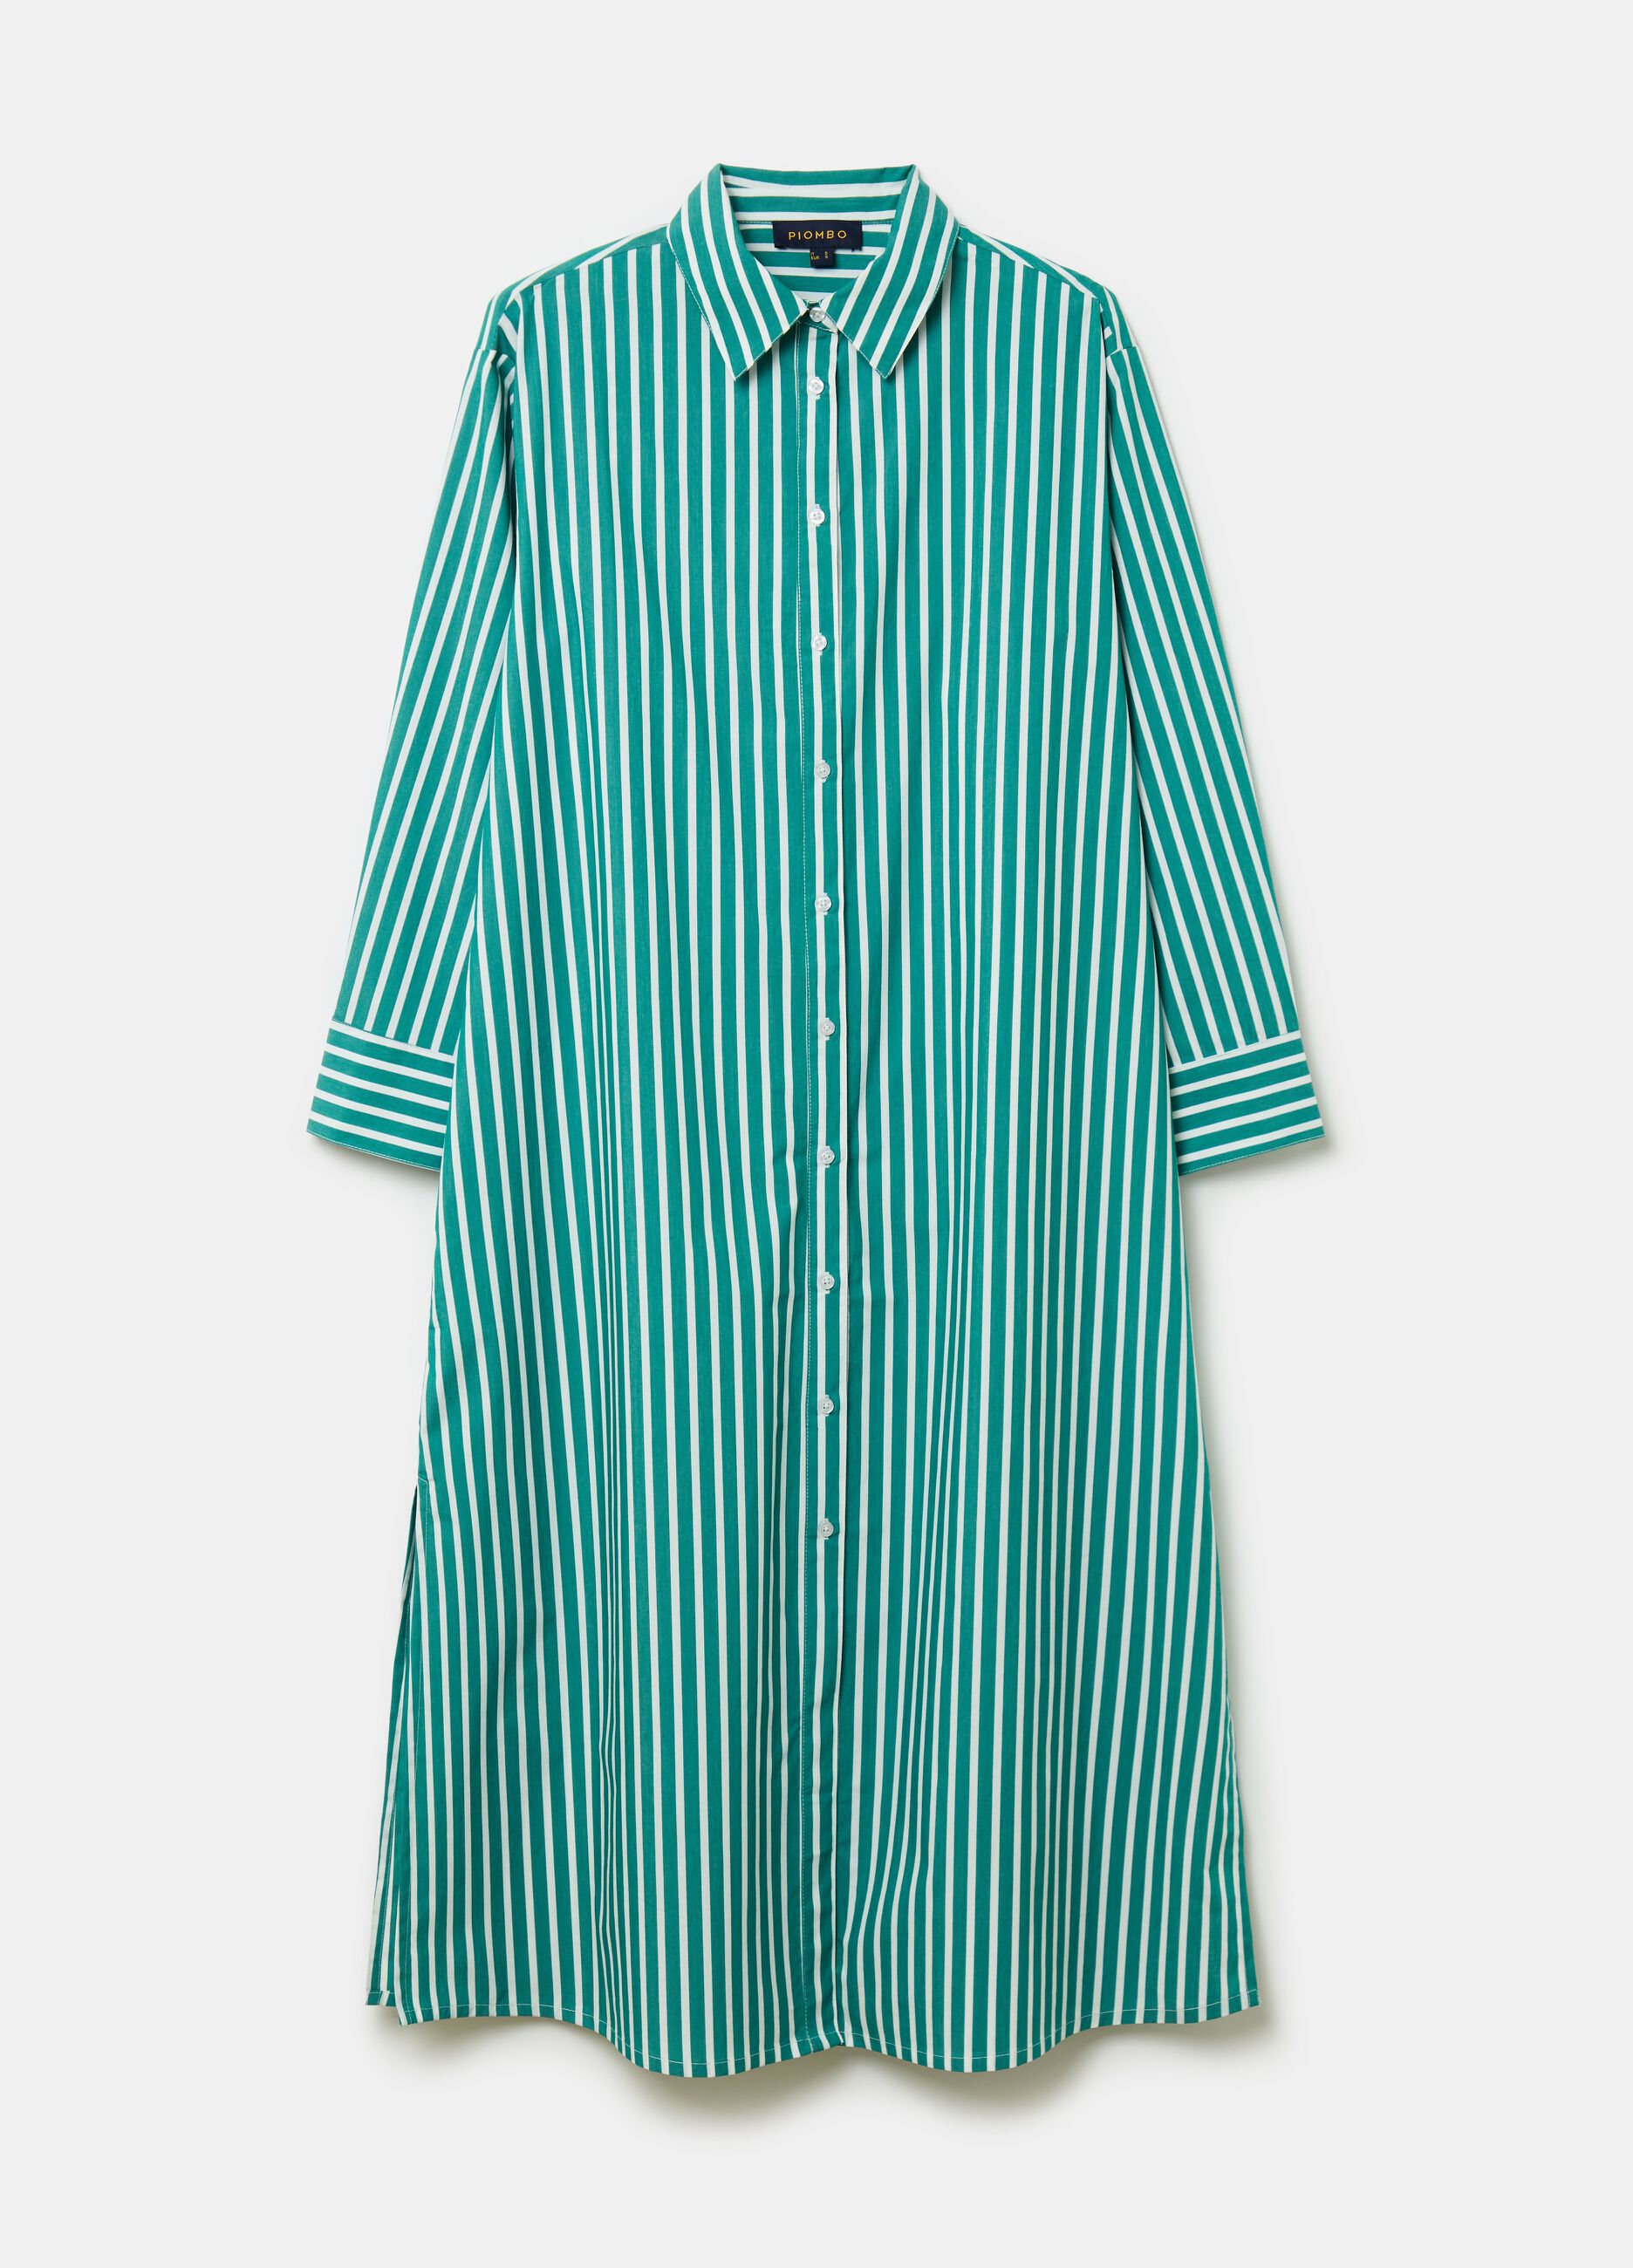 Long striped beach cover-up shirt